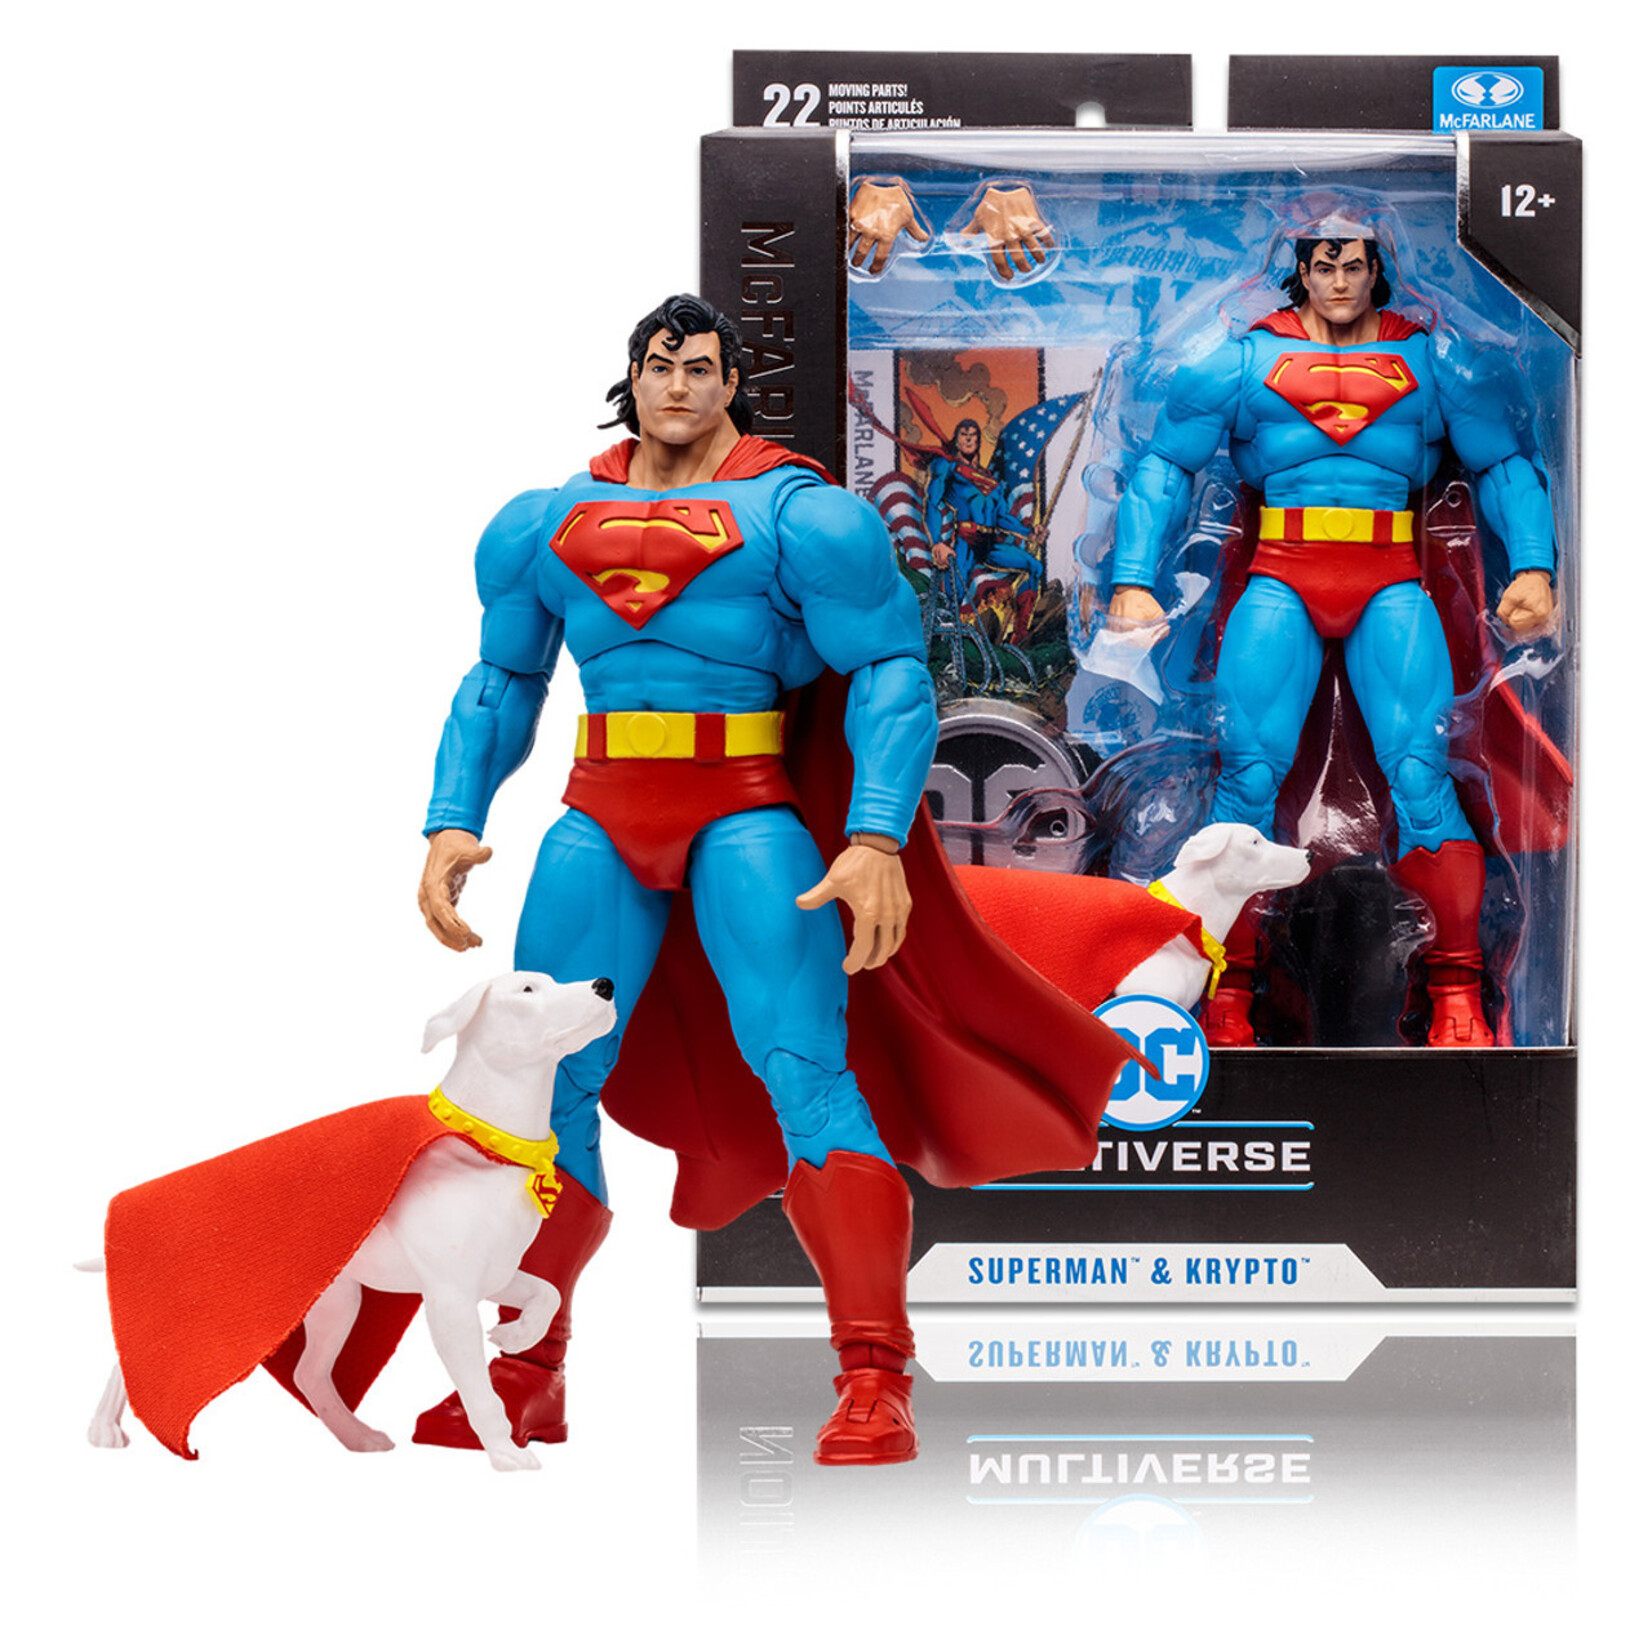 McFarlane Toys McFarlane Toys DC Comics Superman & Krypto Collector Edition Action Figure 18 cm